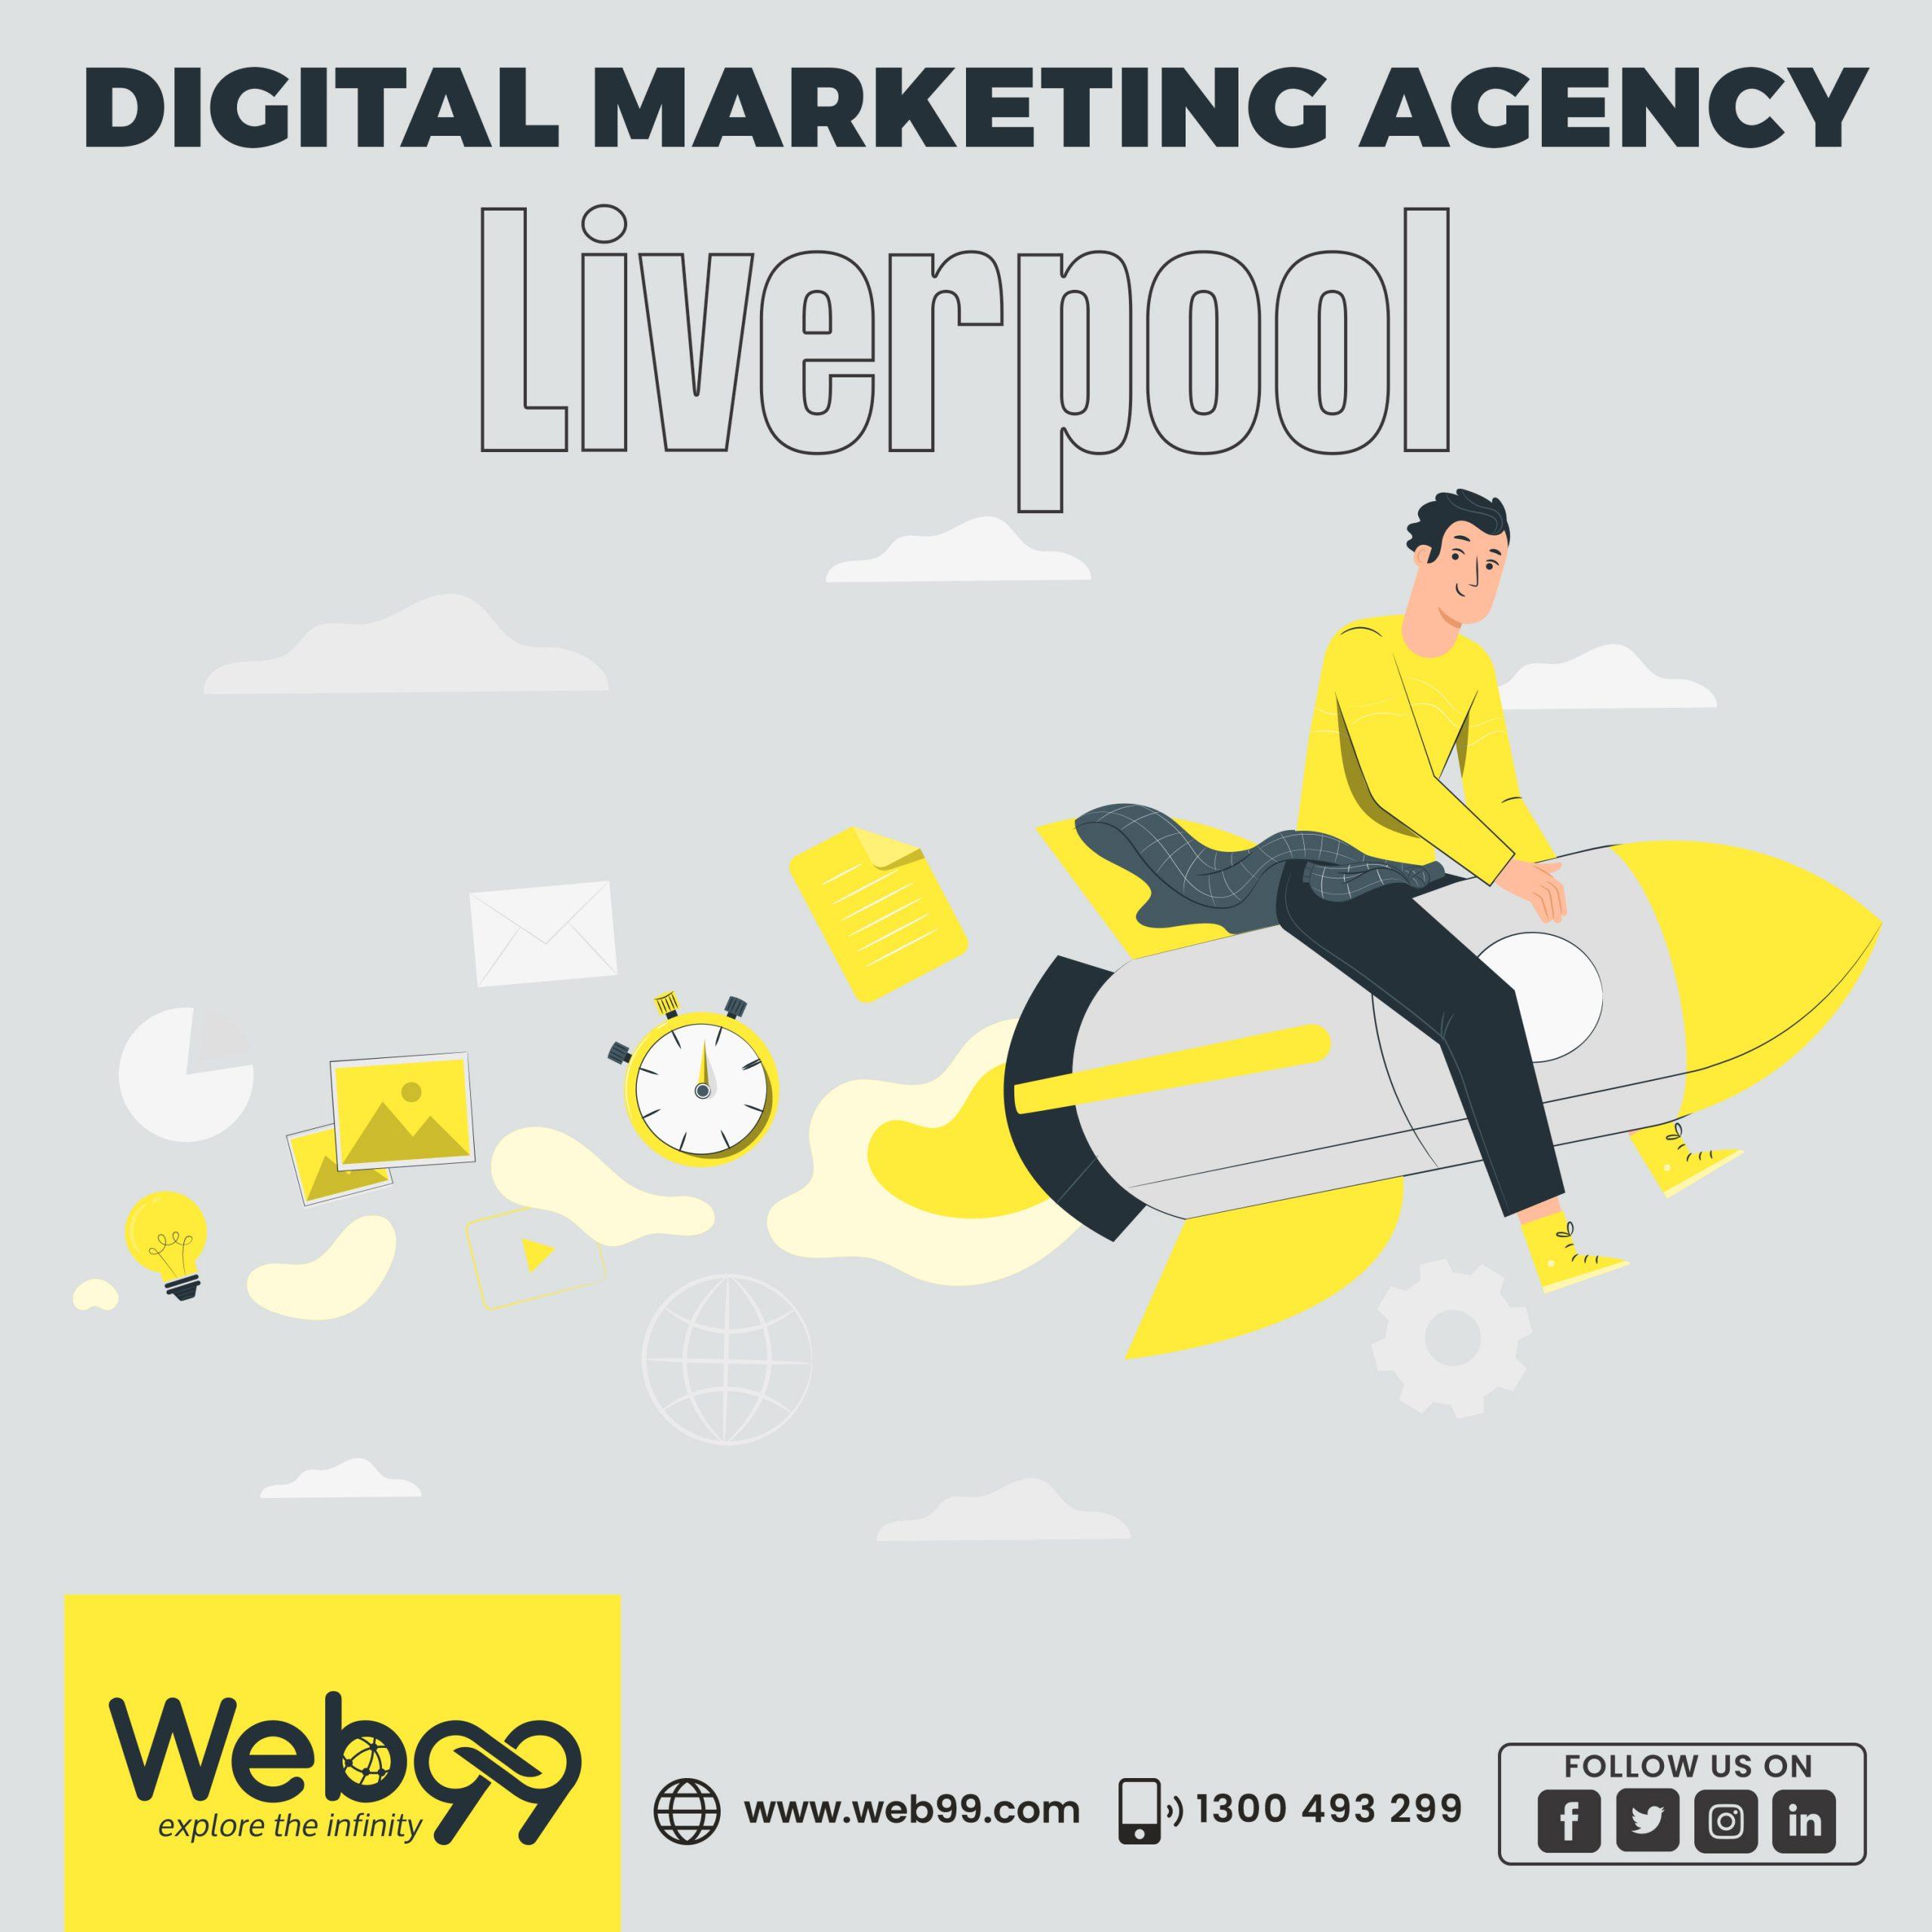 Digital Marketing Agency Liverpool